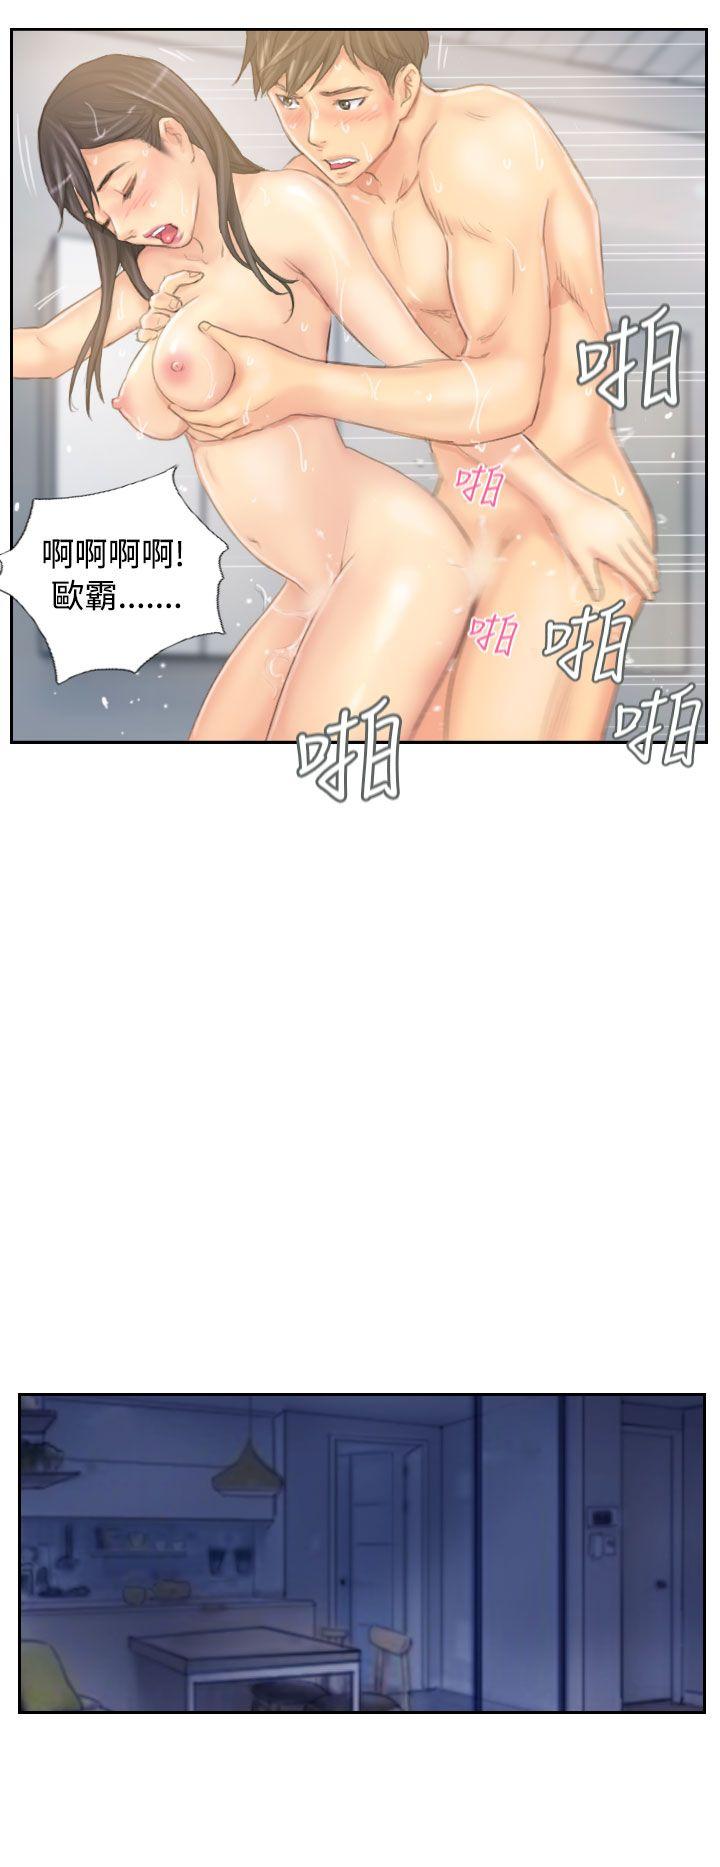 NEW FACE  最终话 漫画图片8.jpg